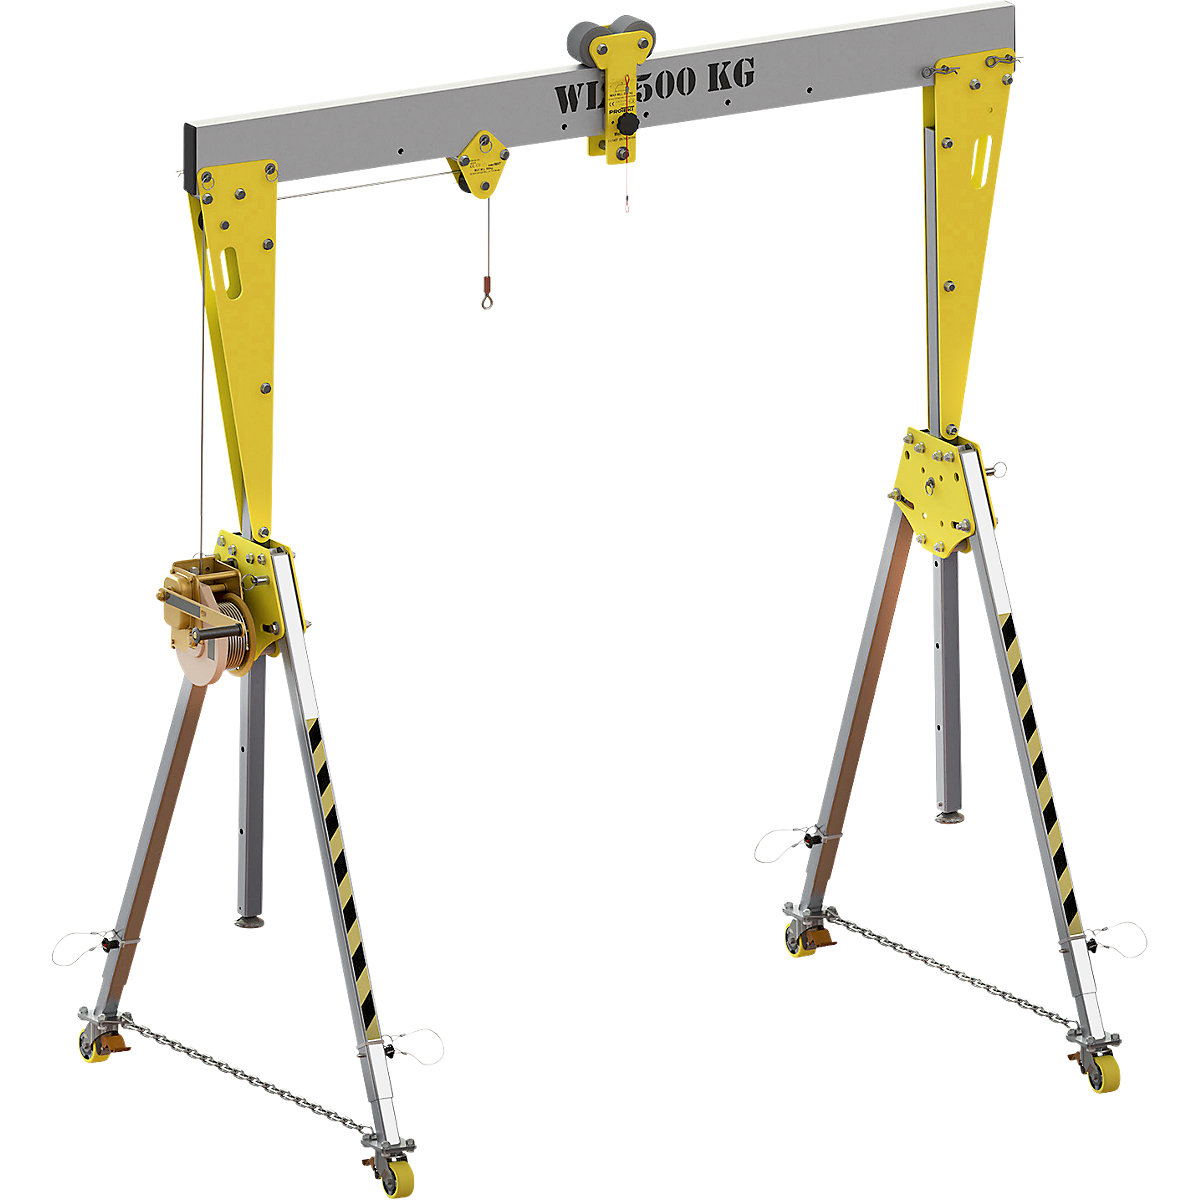 RKPK aluminium gantry crane